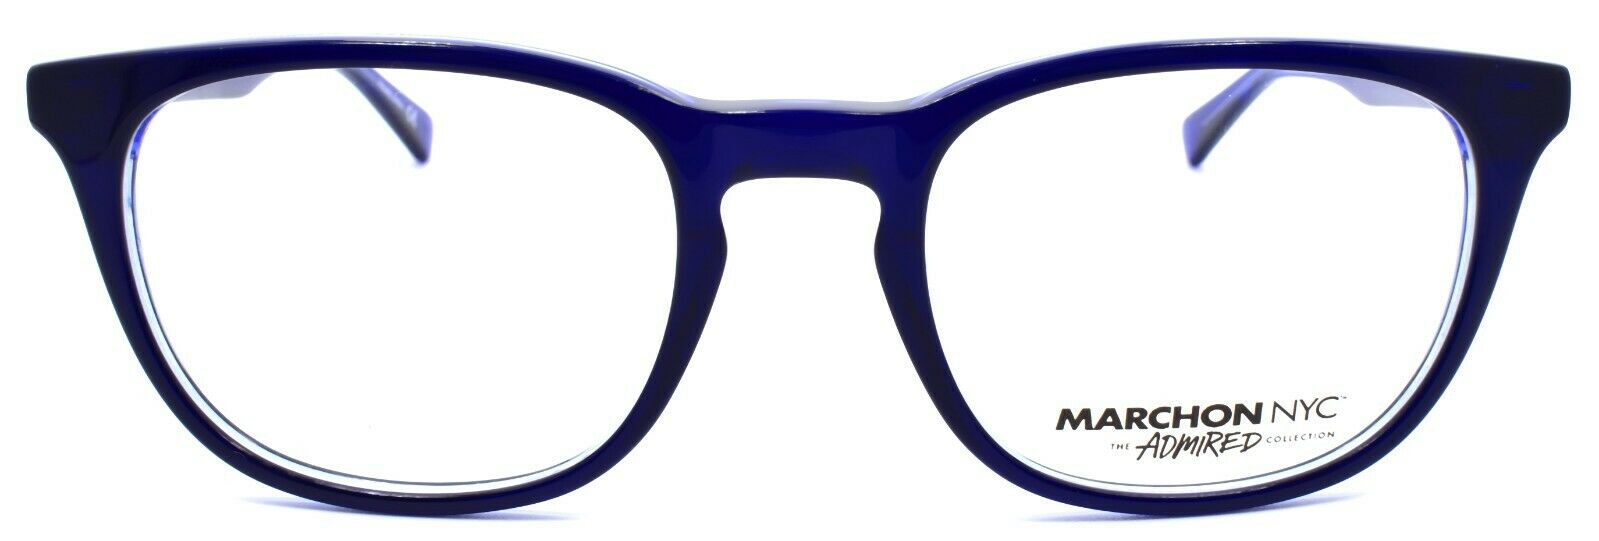 2-Marchon M3506 412 Men's Eyeglasses Frames 51-20-140 Navy-886895483469-IKSpecs